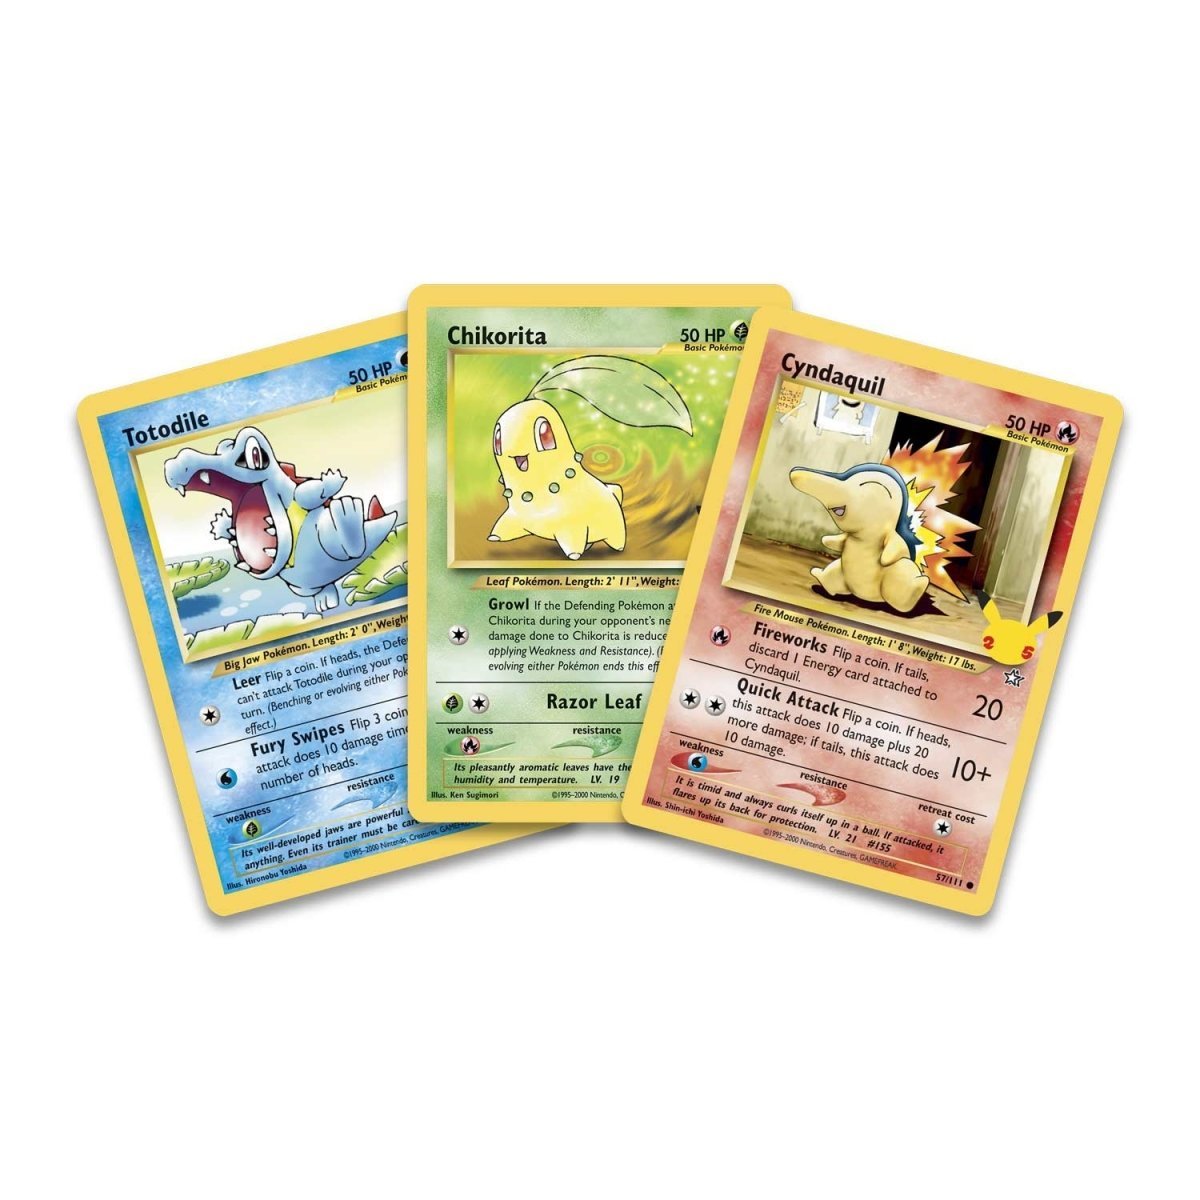 Pokémon TCG: First Partner Pack - Johto - PokeRvm